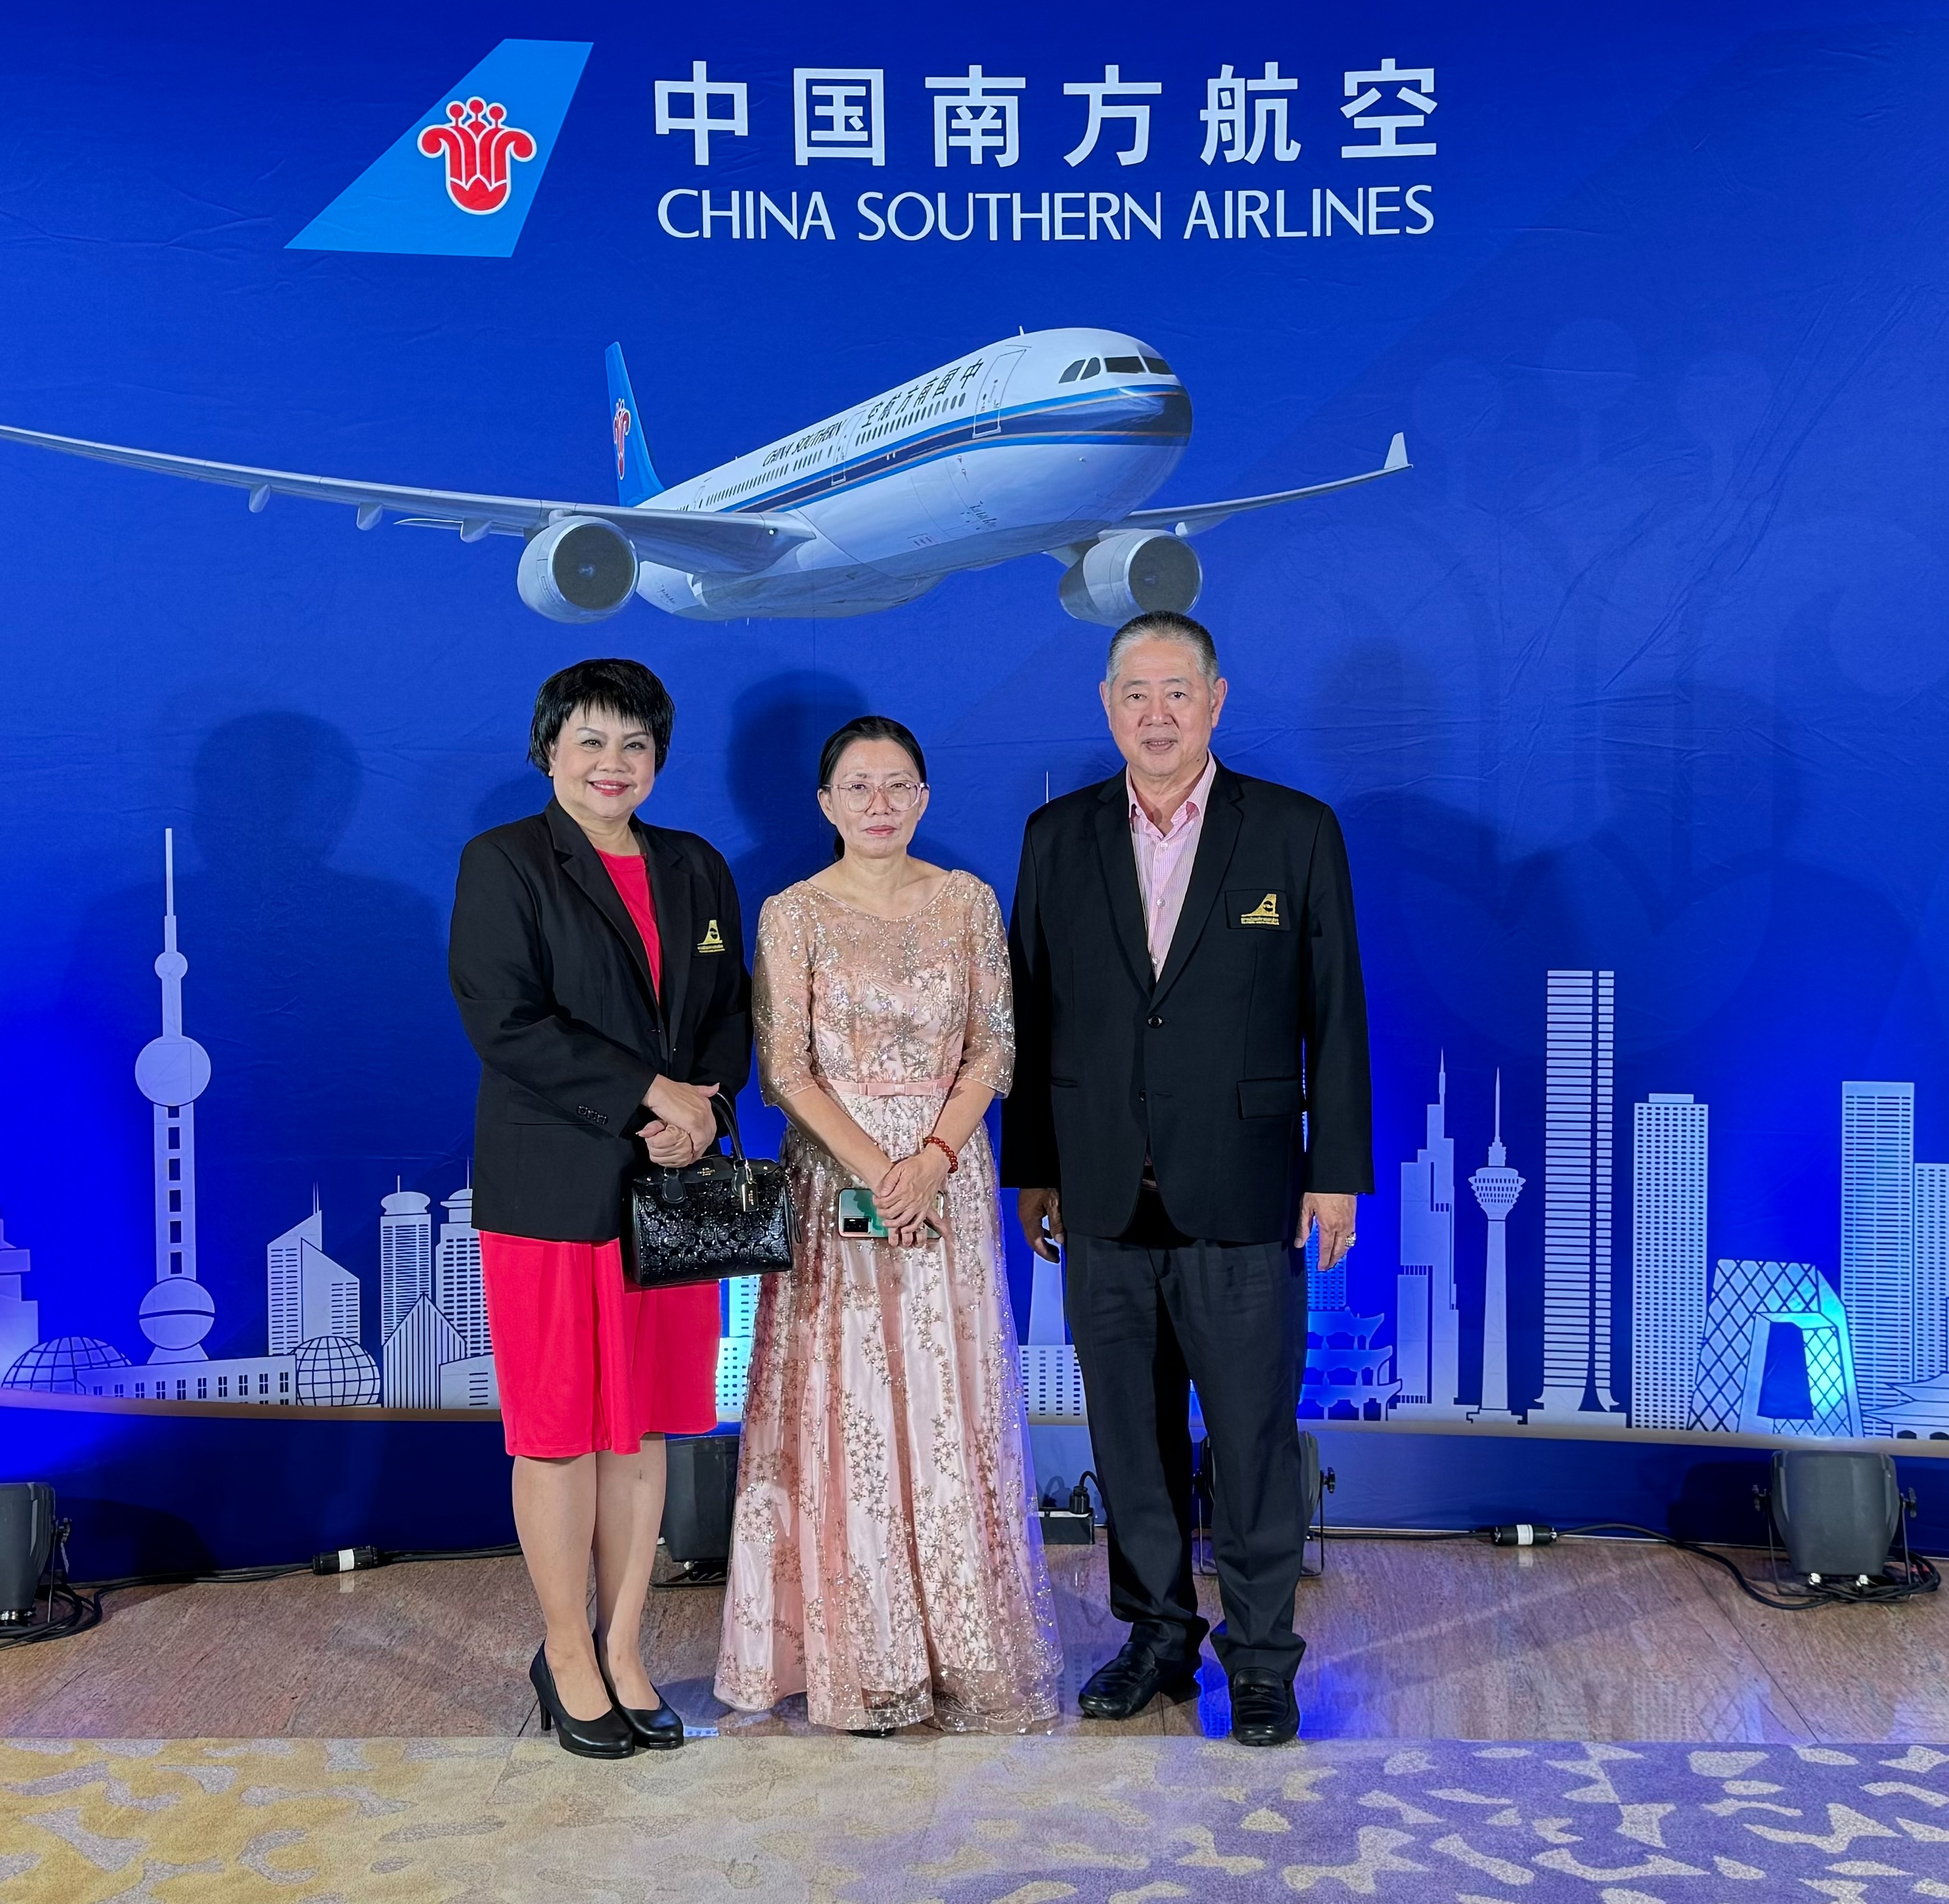 TTAA  เข้าร่วมงาน China Southern Airlines “Wings of Summer”